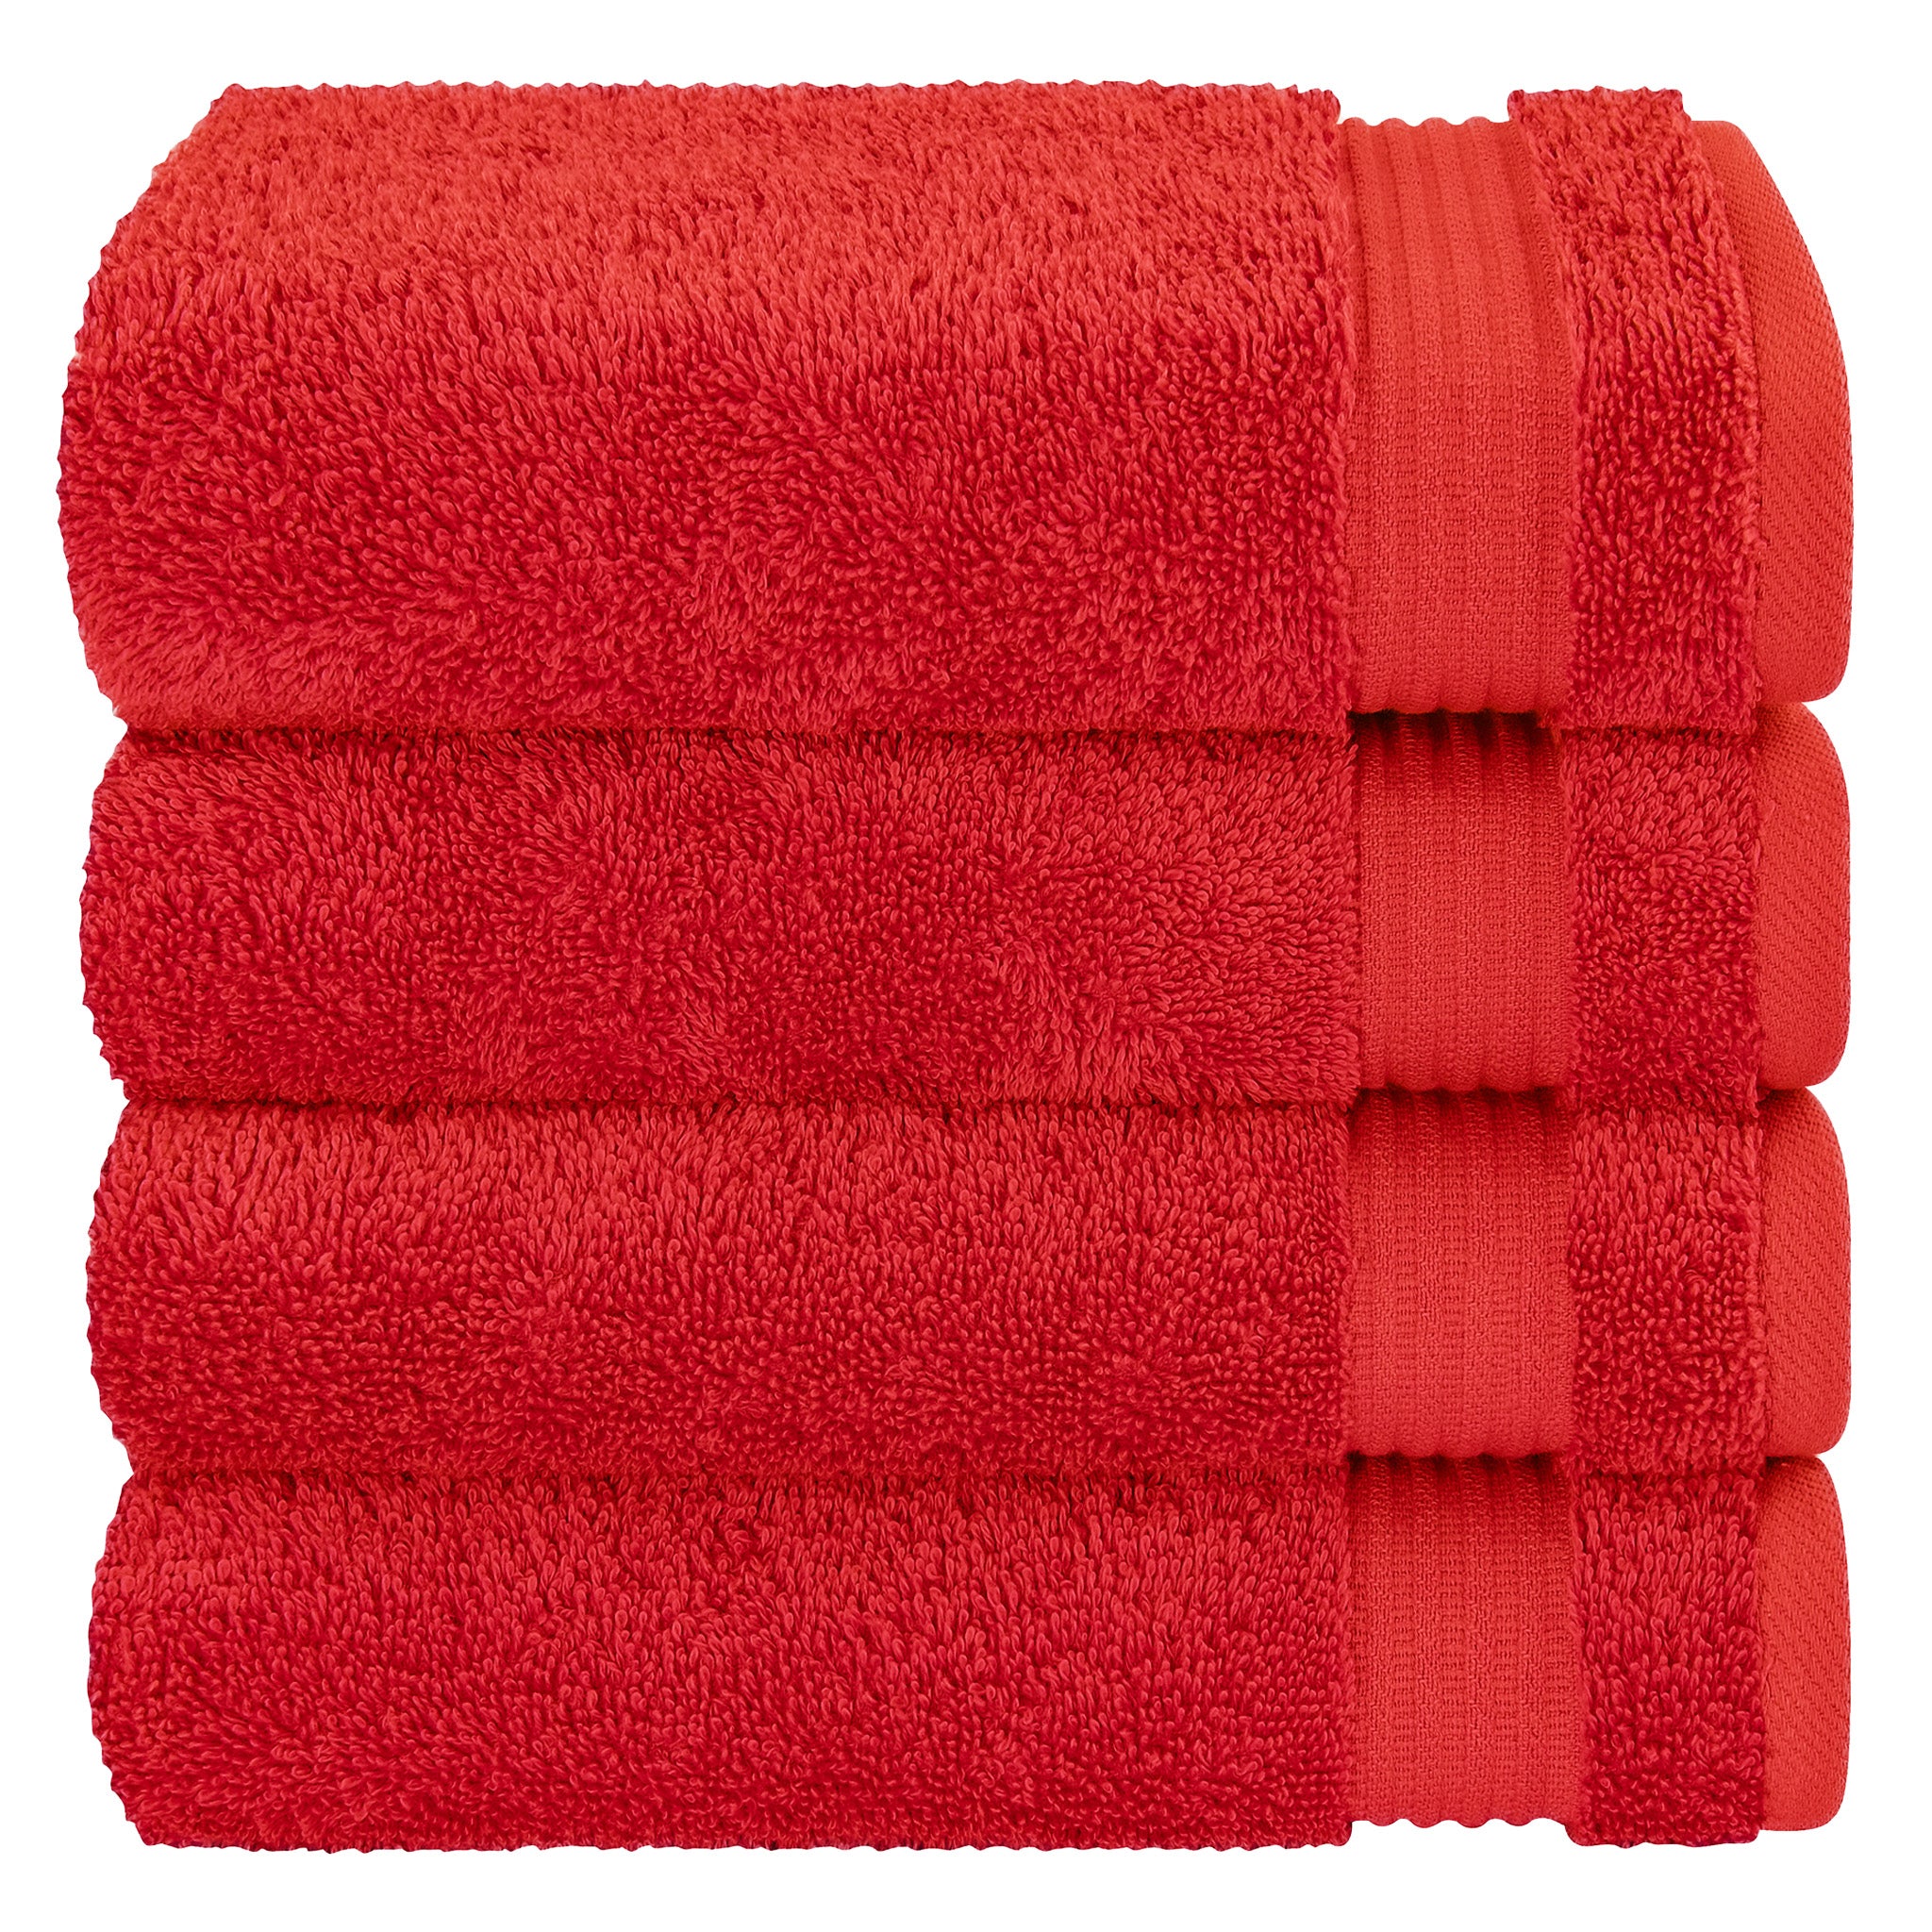 American Soft Linen Bekos 100% Cotton Turkish Towels, 4 Piece Hand Towel Set -red-05